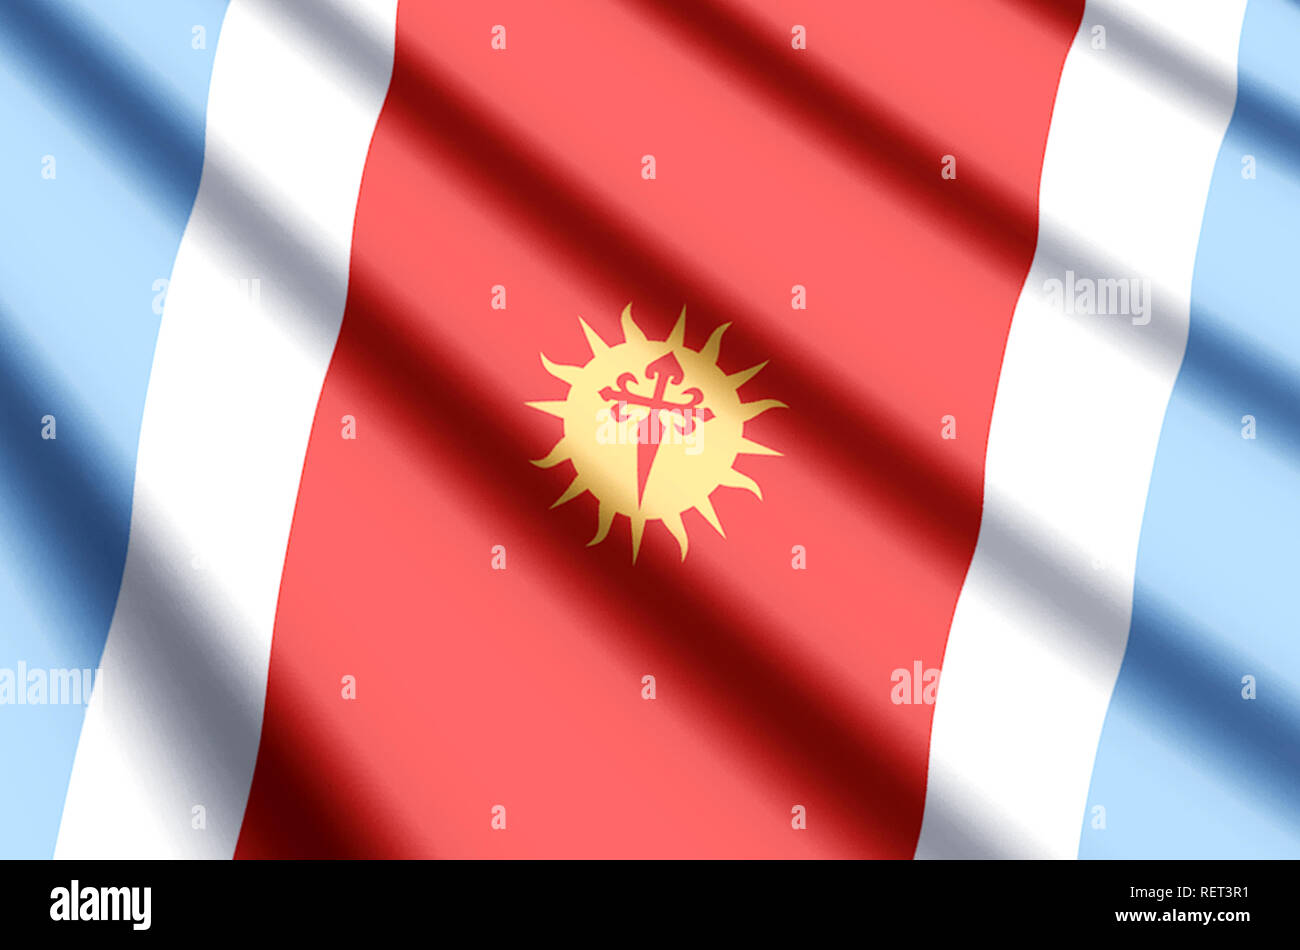 Santiago del Estero waving and closeup flag illustration. Perfect for background or texture purposes. Stock Photo